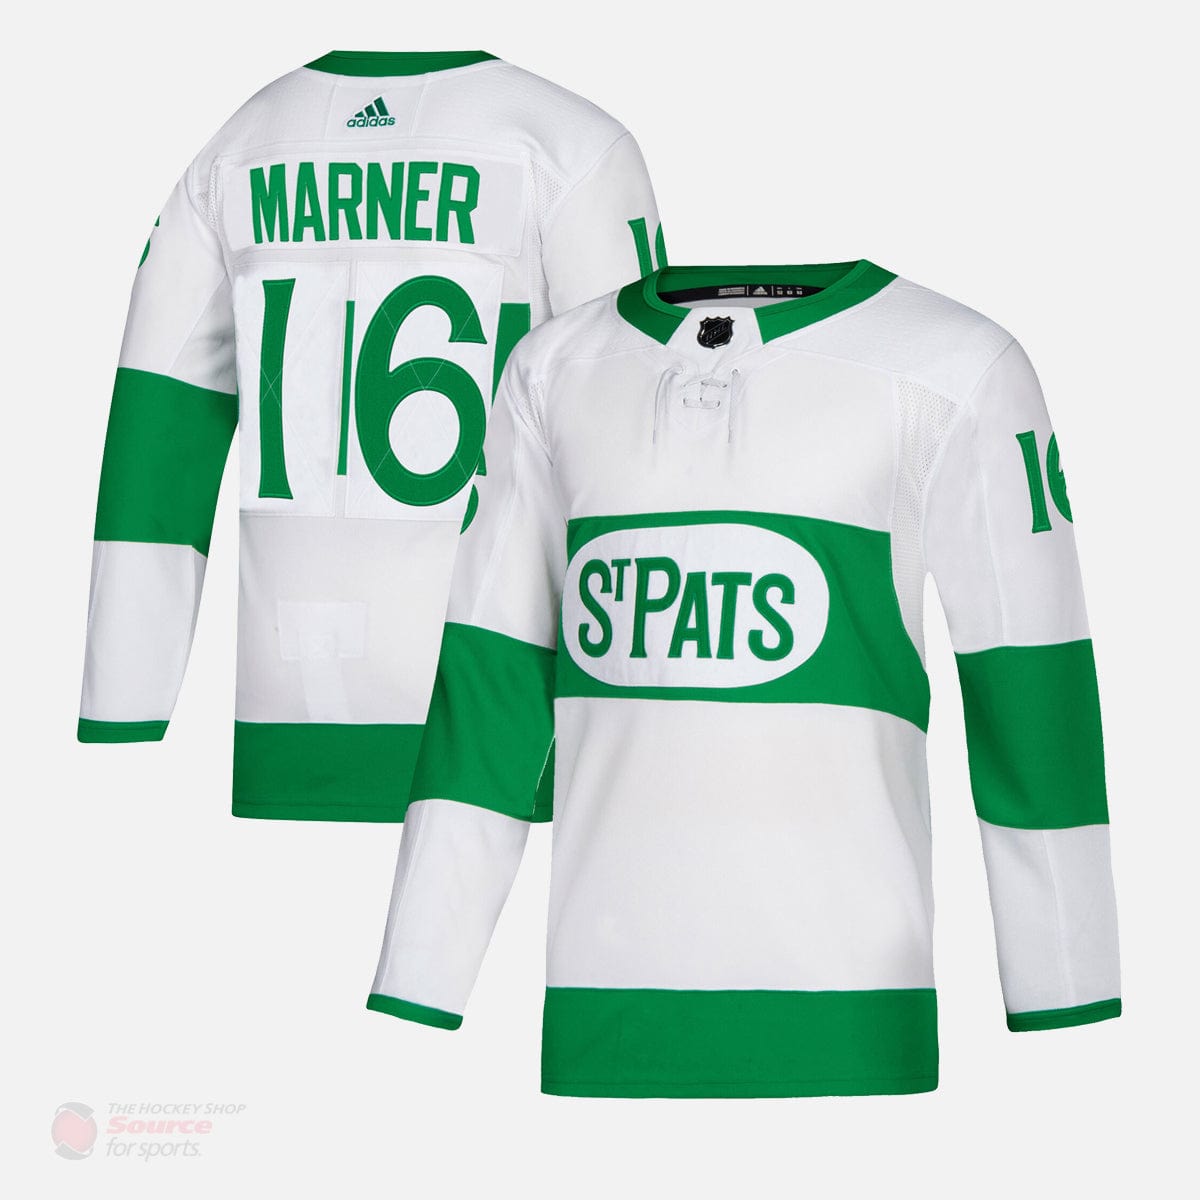 Mitch Marner Toronto Maple Leafs St. Pats Adidas Hockey Jersey size 50 NWT